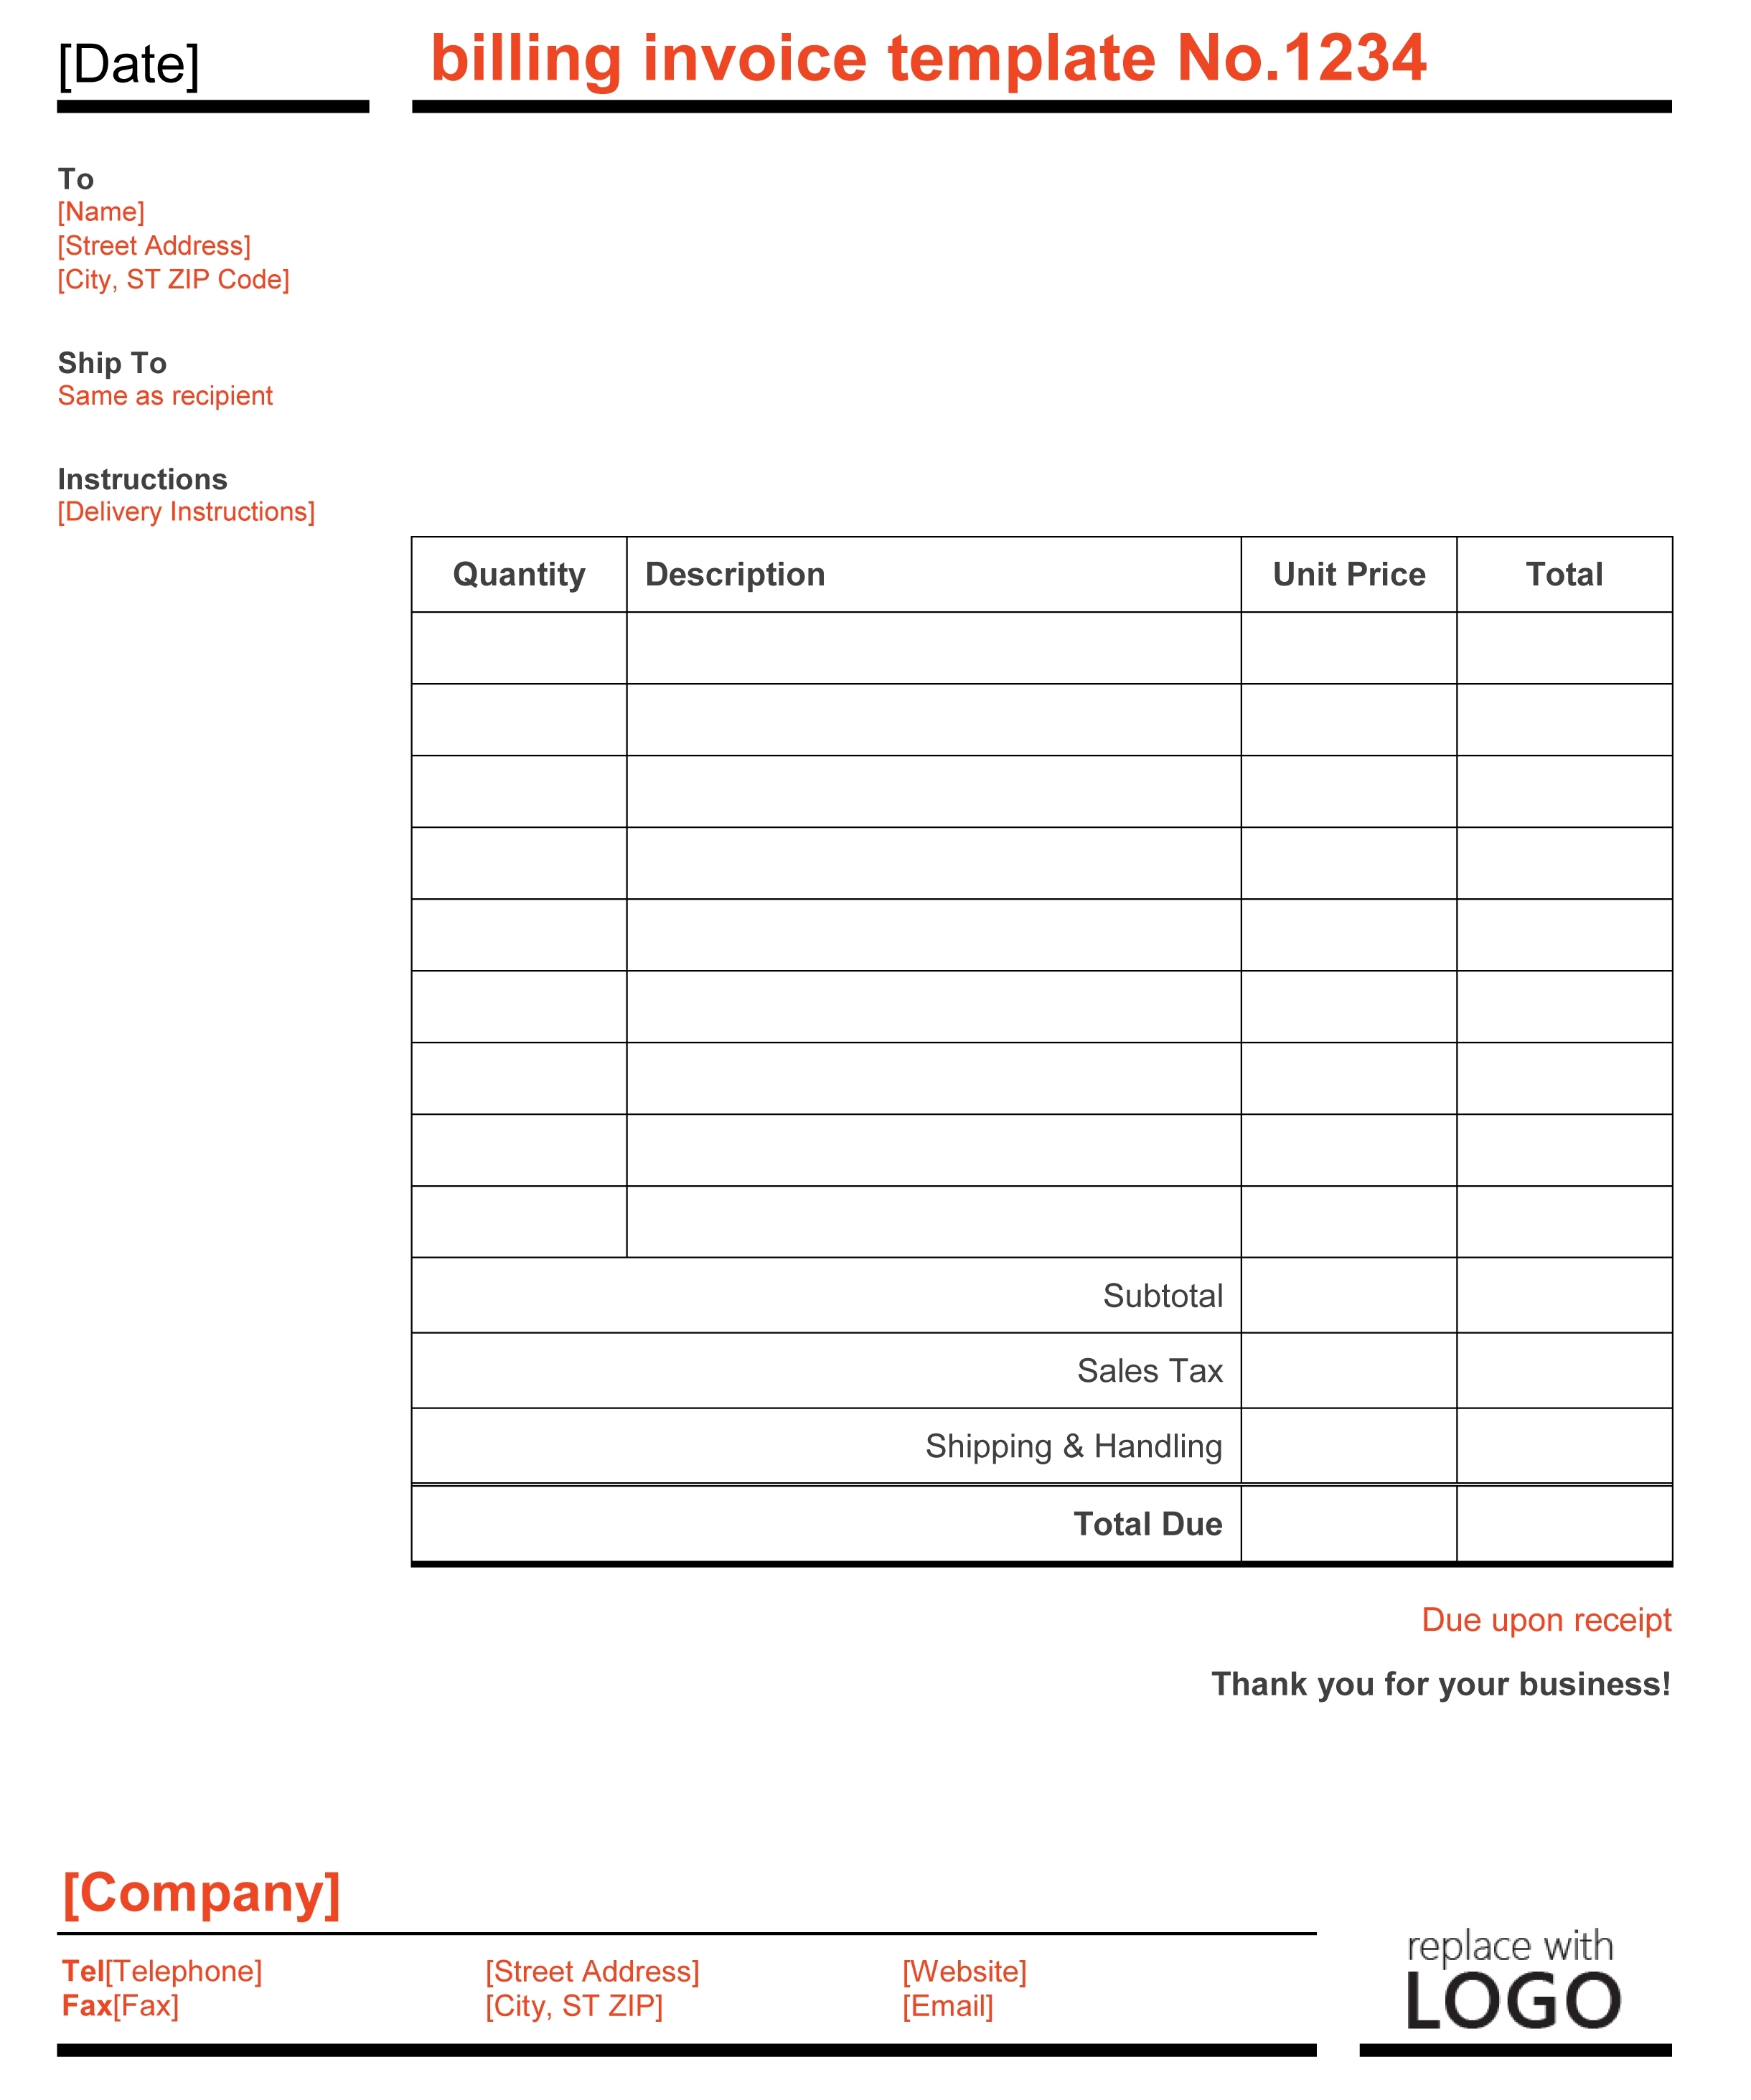 billing invoice template invoice template free 2016 free billing invoice templates